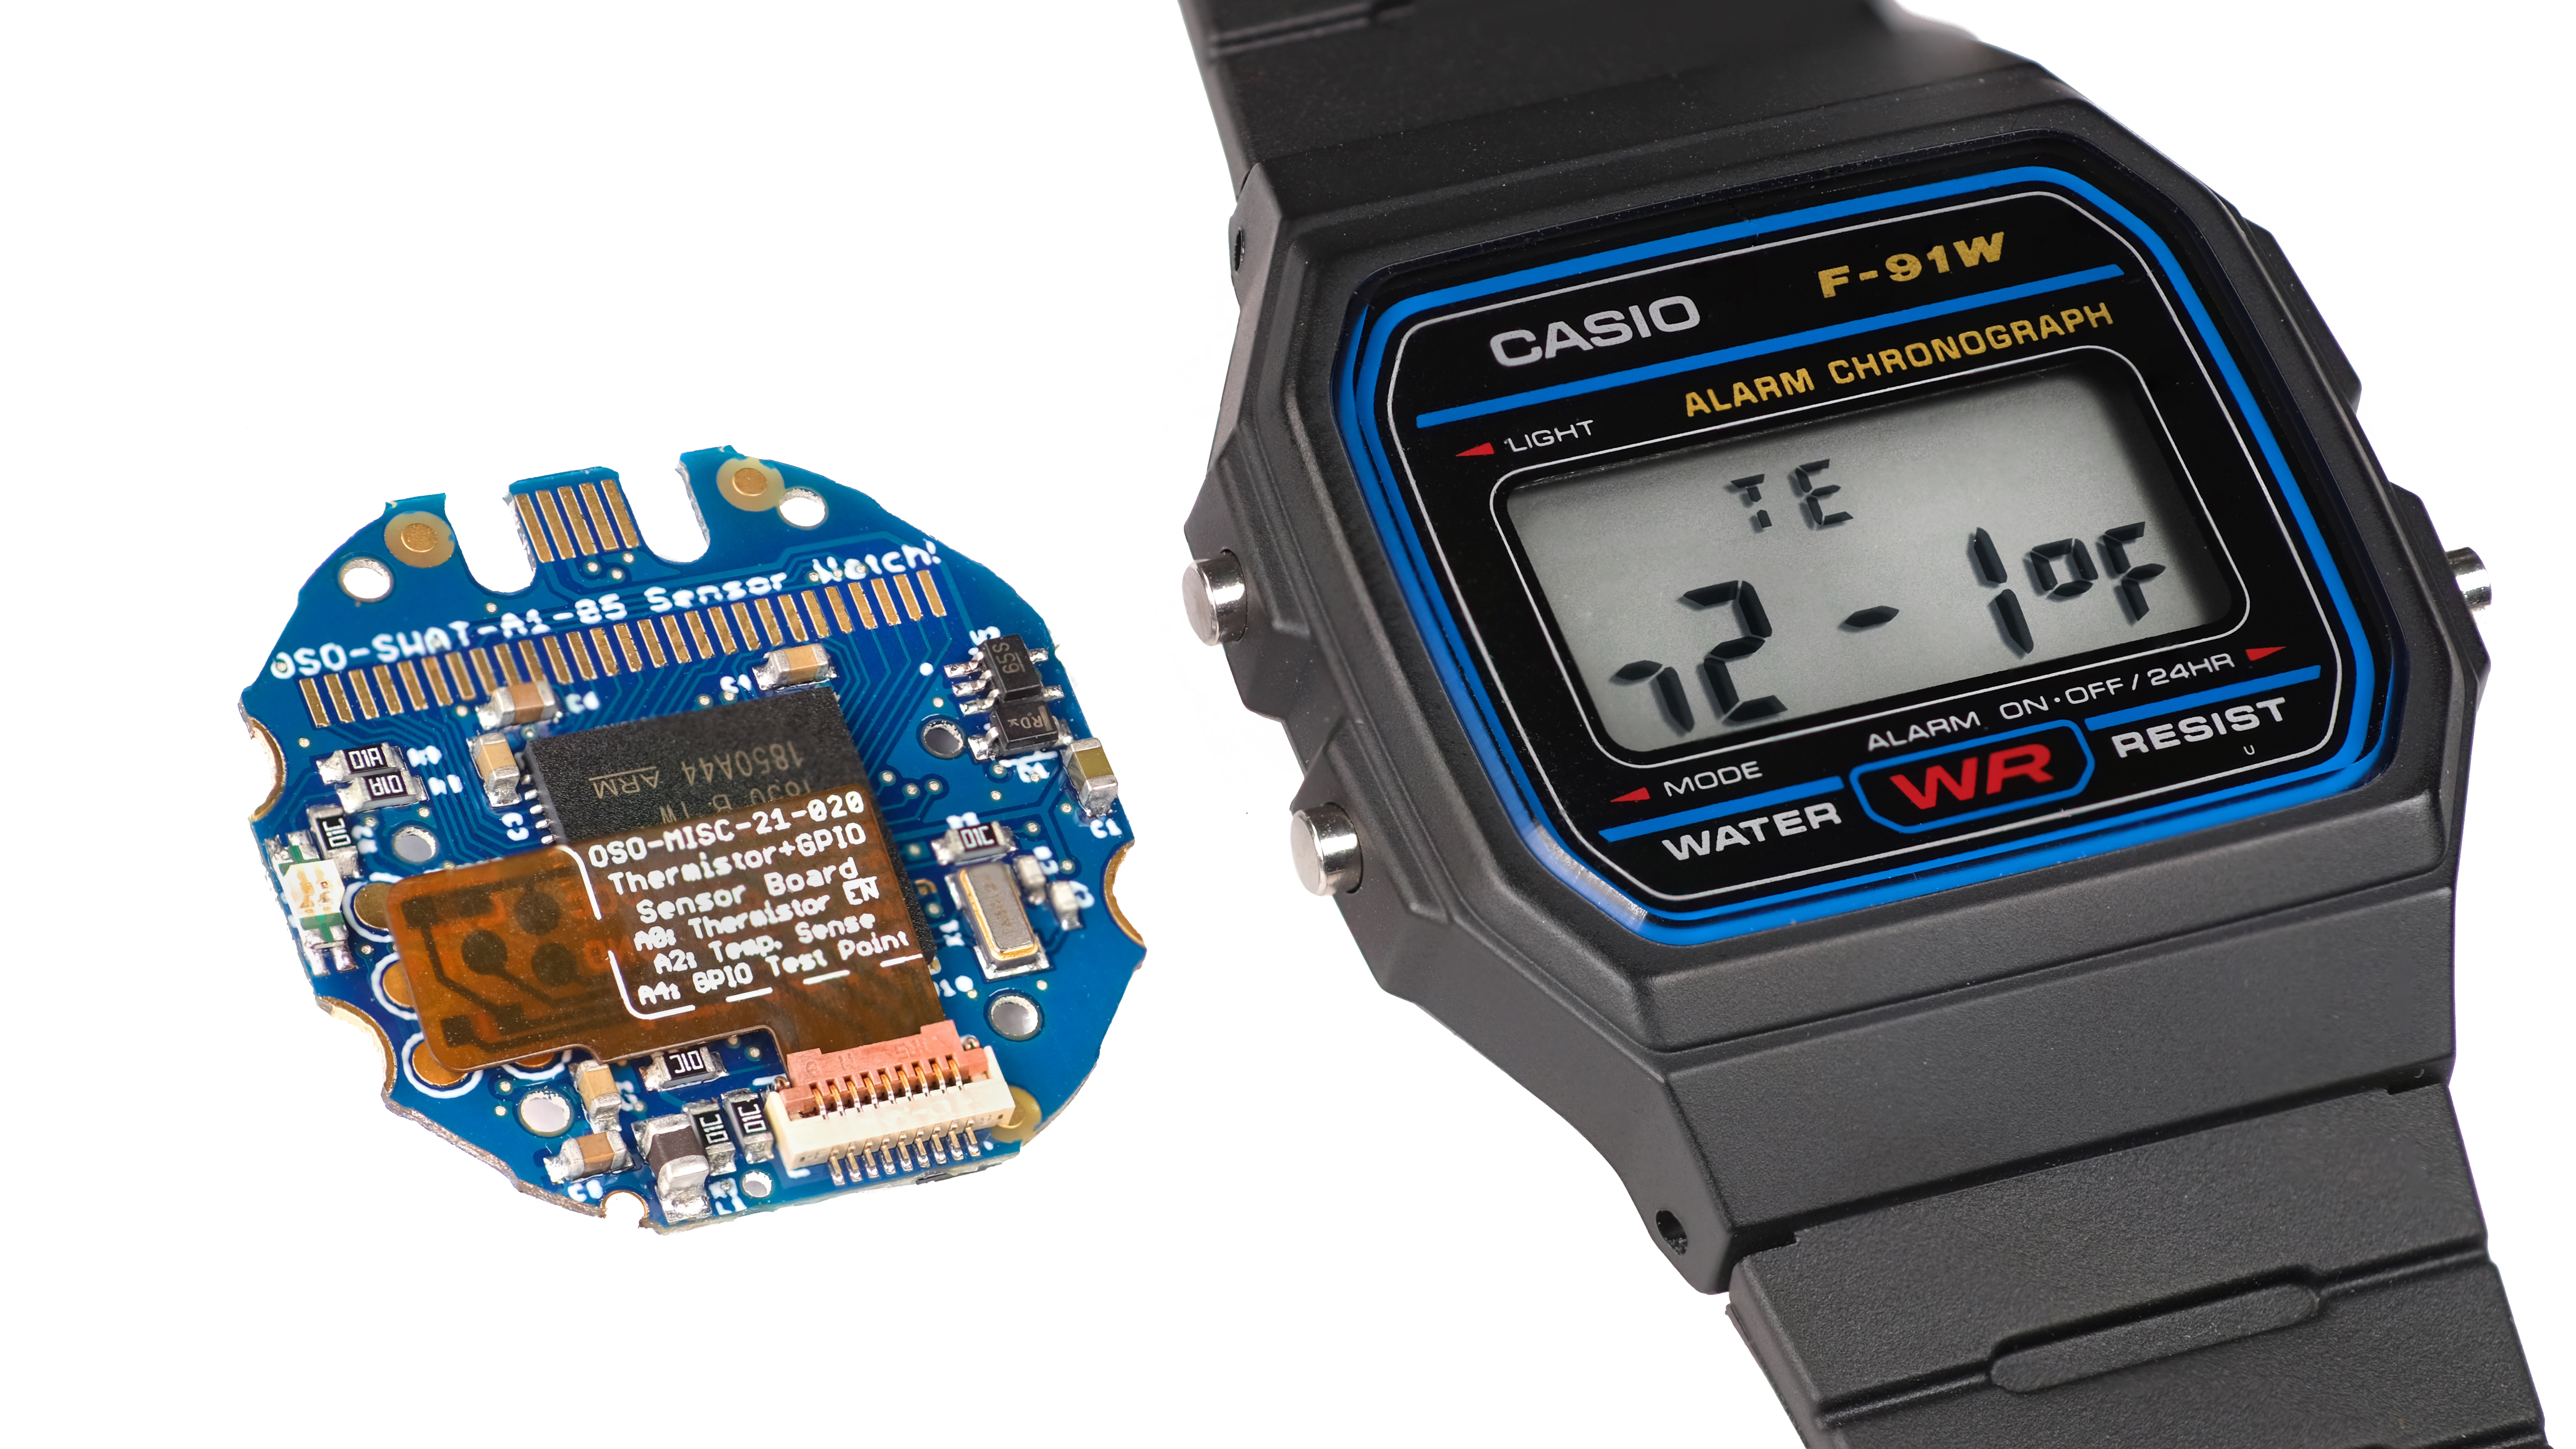 Photo: the Sensor Watch circuit board next to a Casio F-91W